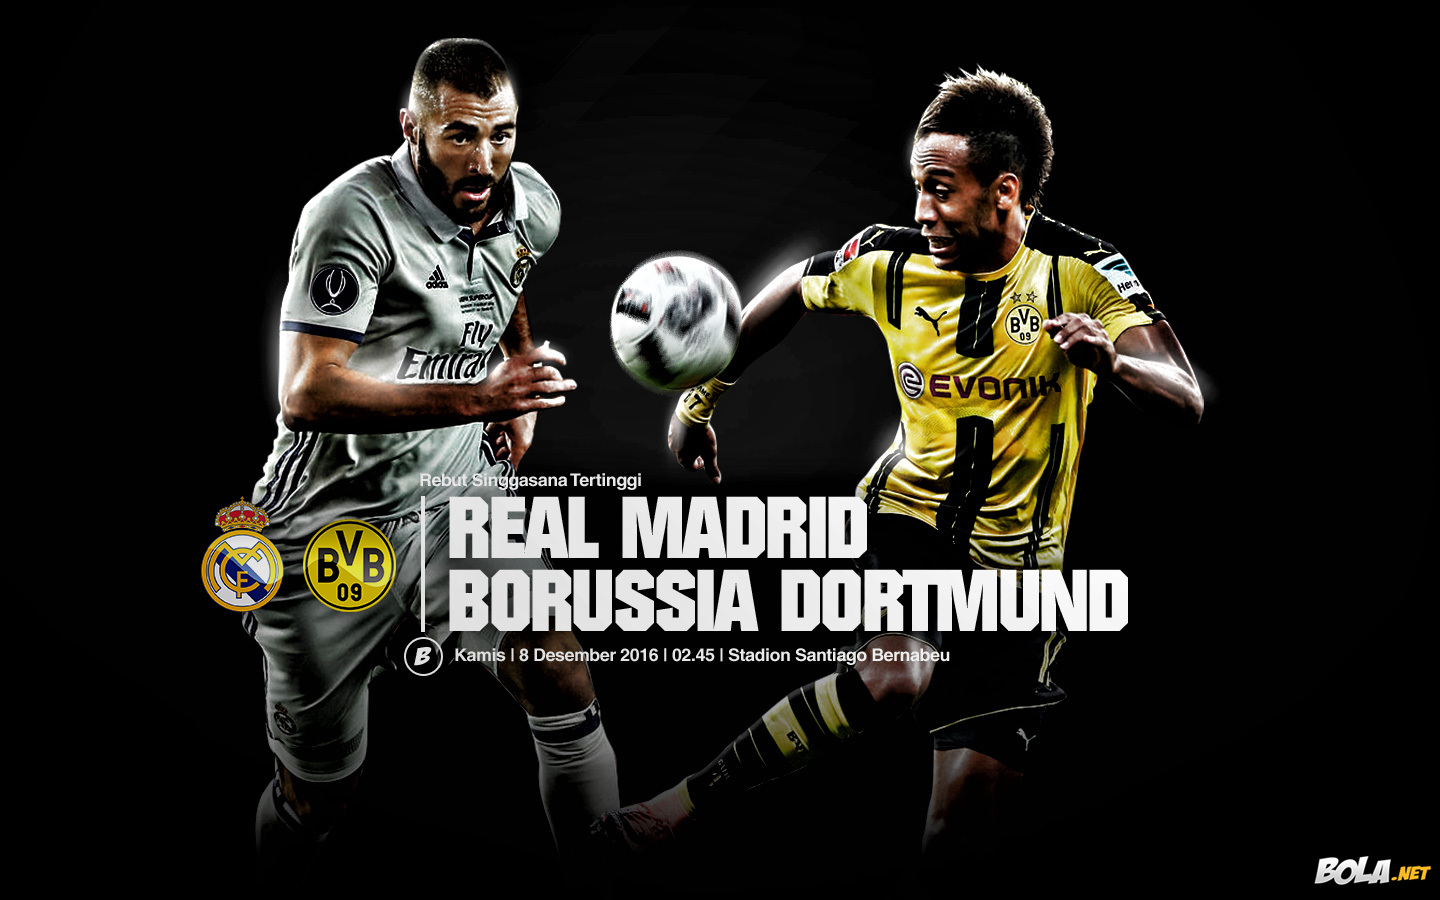 Deskripsi : Wallpaper Real Madrid Vs Borussia Dortmund, size: 1440x900